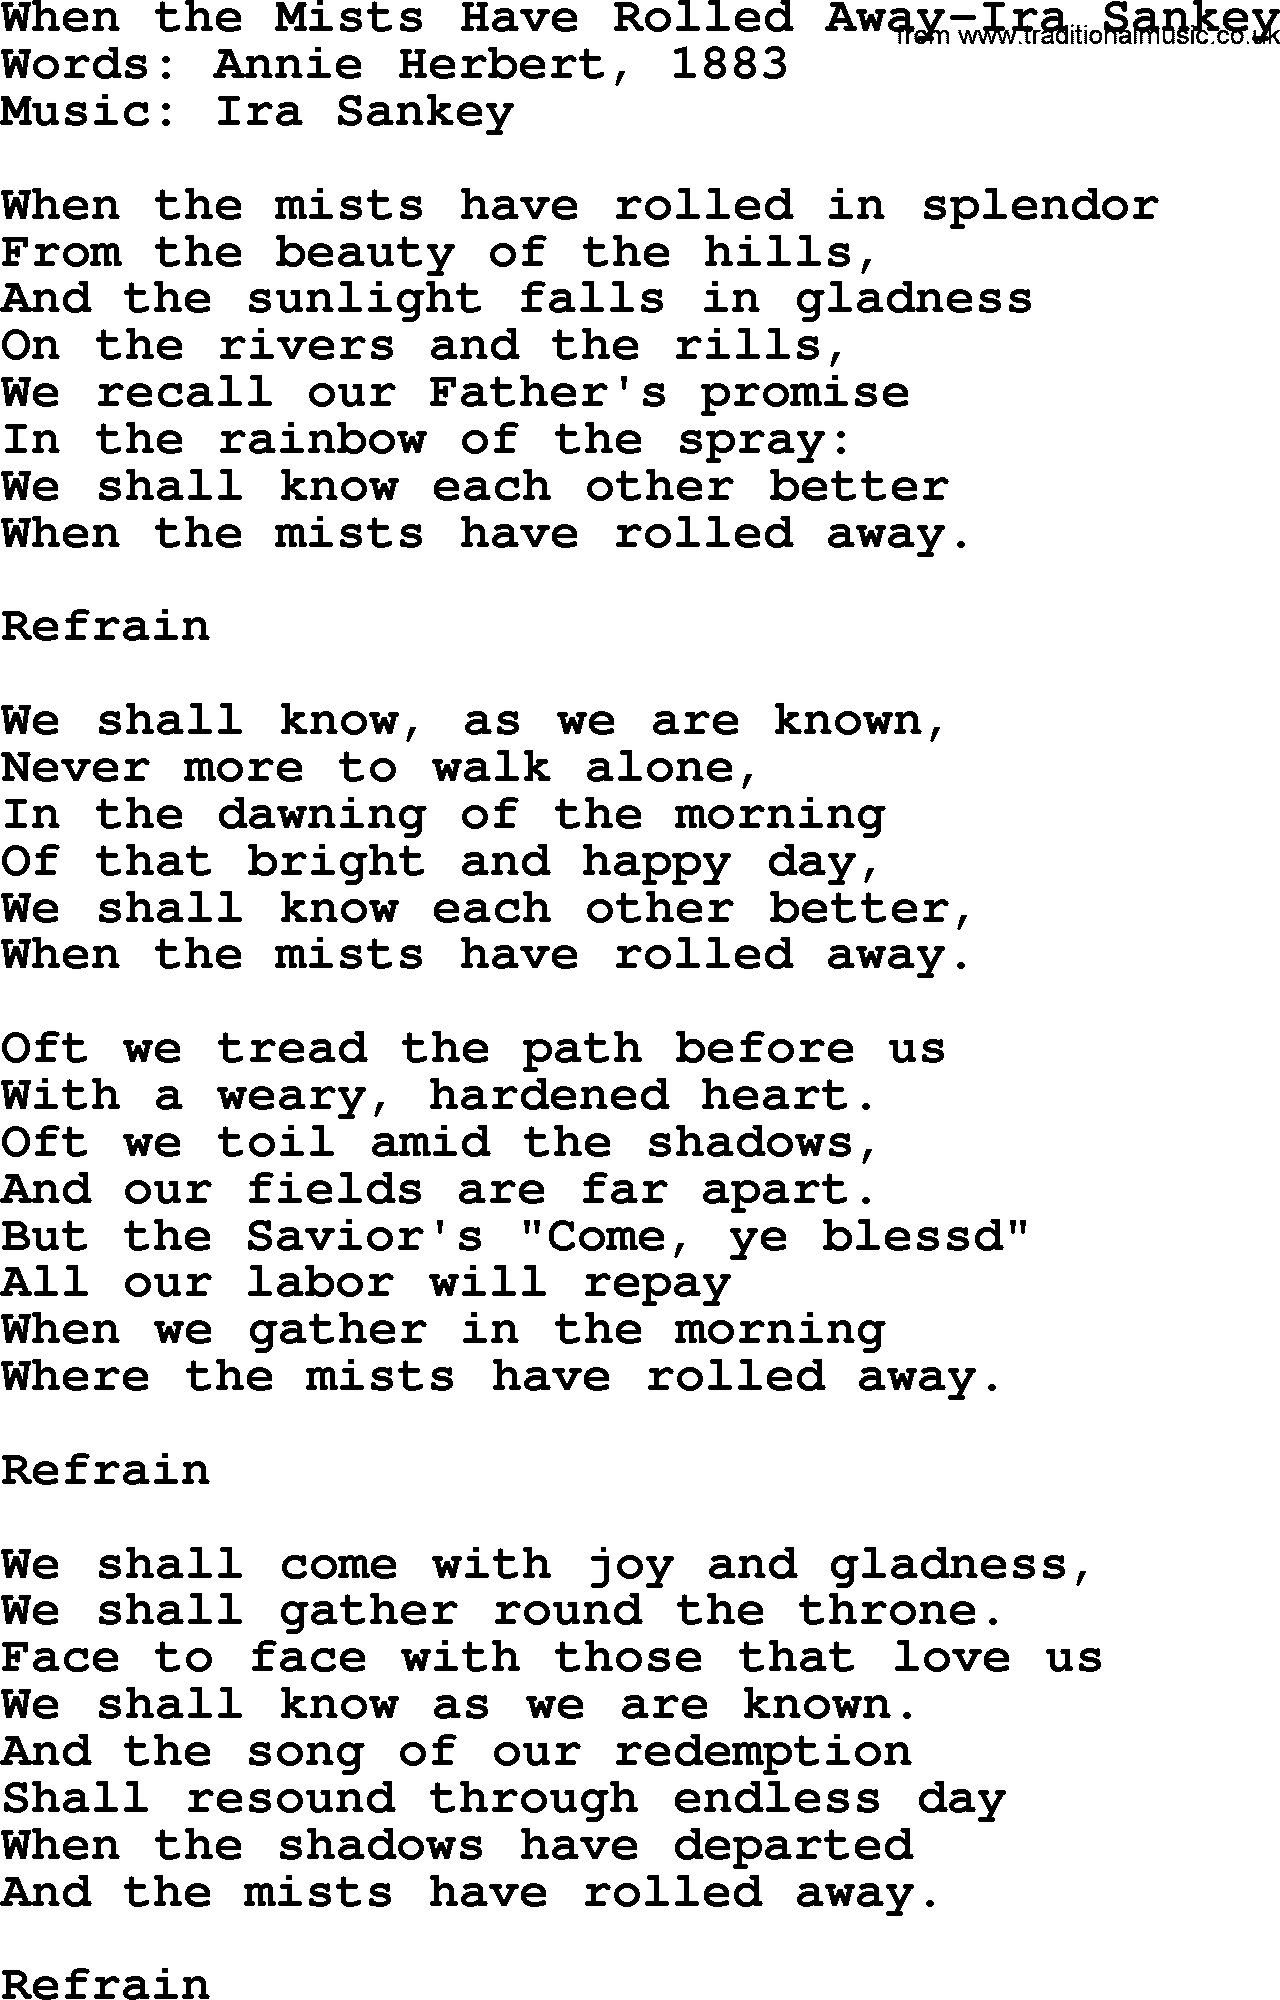 Ira Sankey hymn: When the Mists Have Rolled Away-Ira Sankey, lyrics